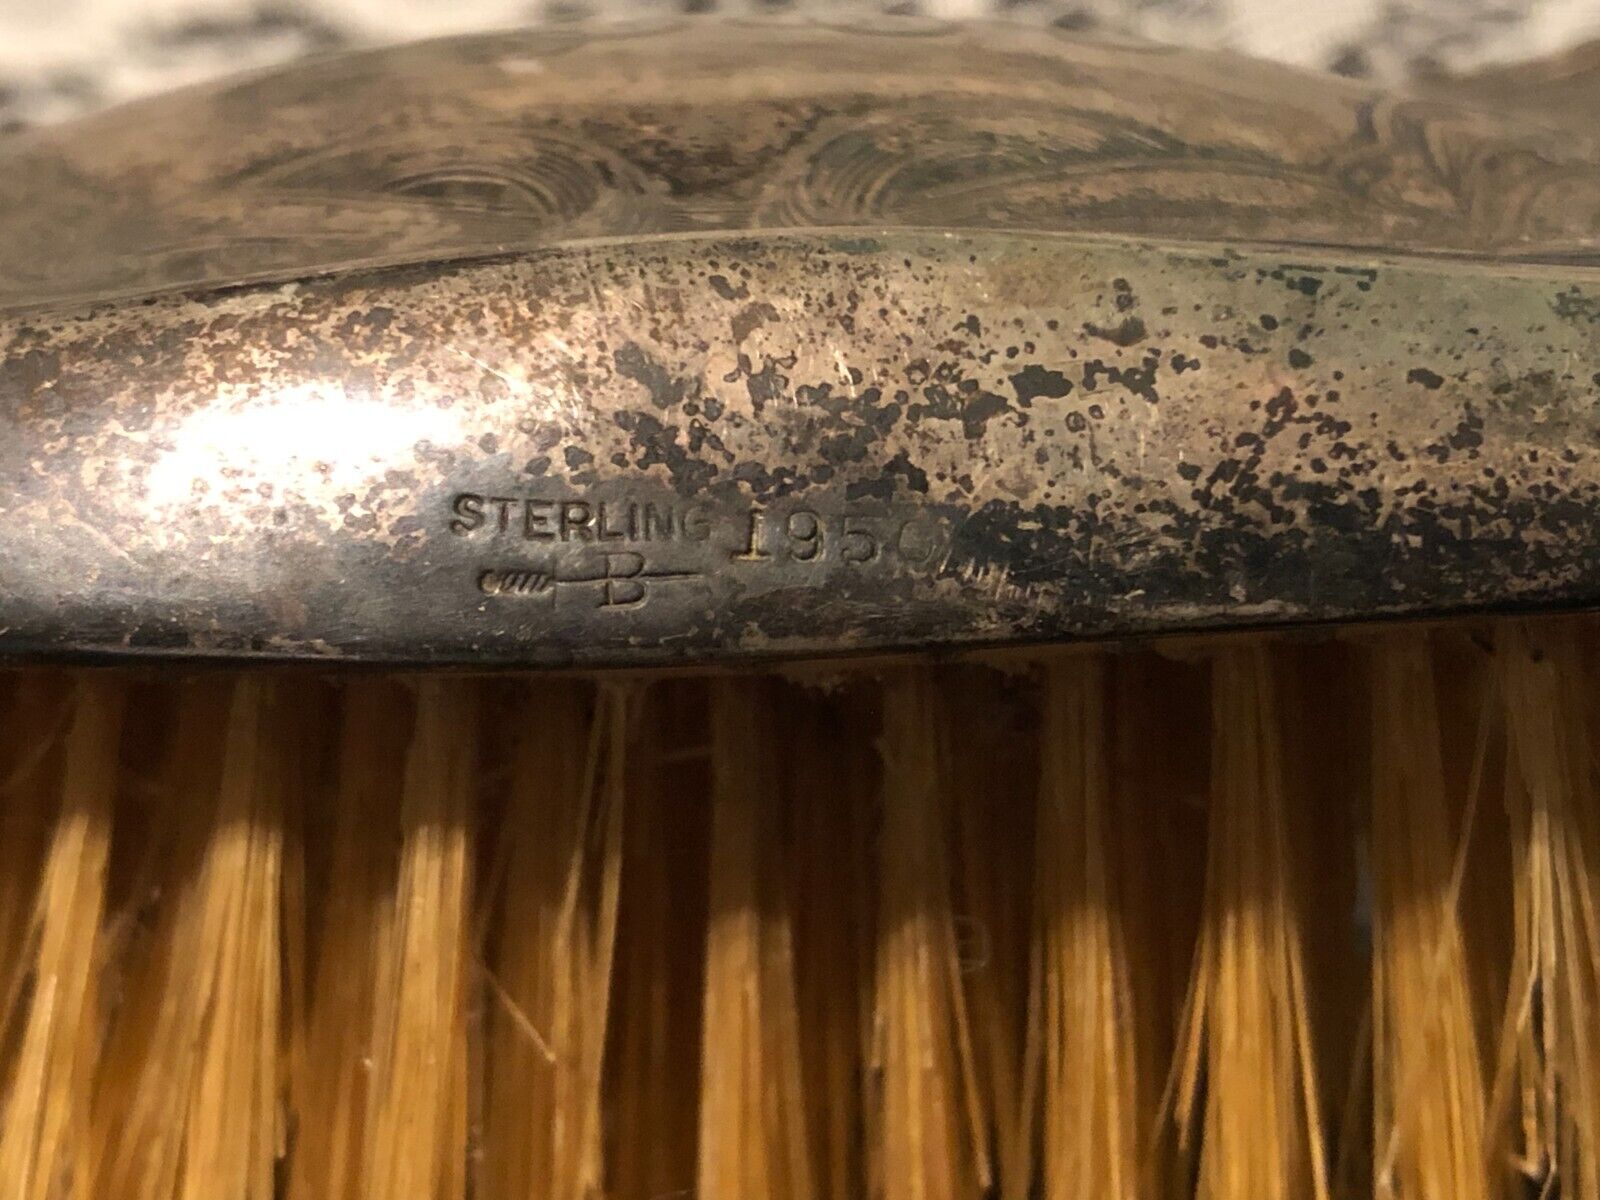 Antique vanity brush sterling 1950         a7